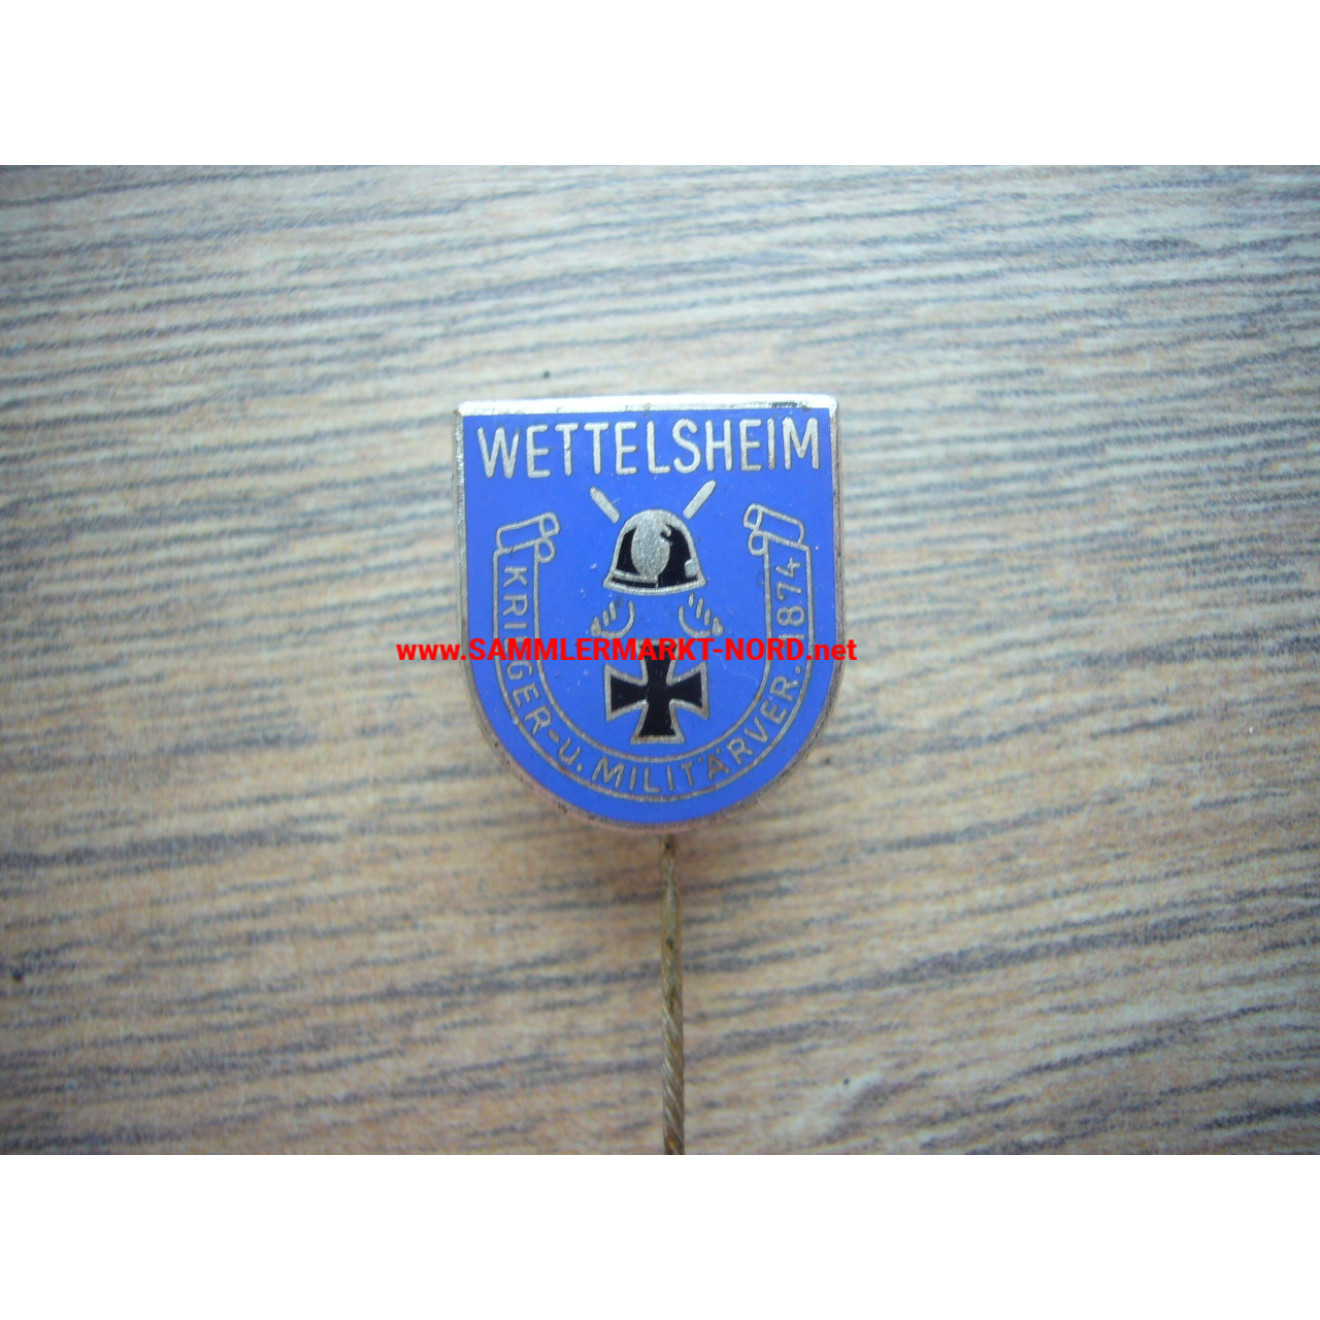 Warriors' and Military Association 1874 Wettelsheim - Membership Badge